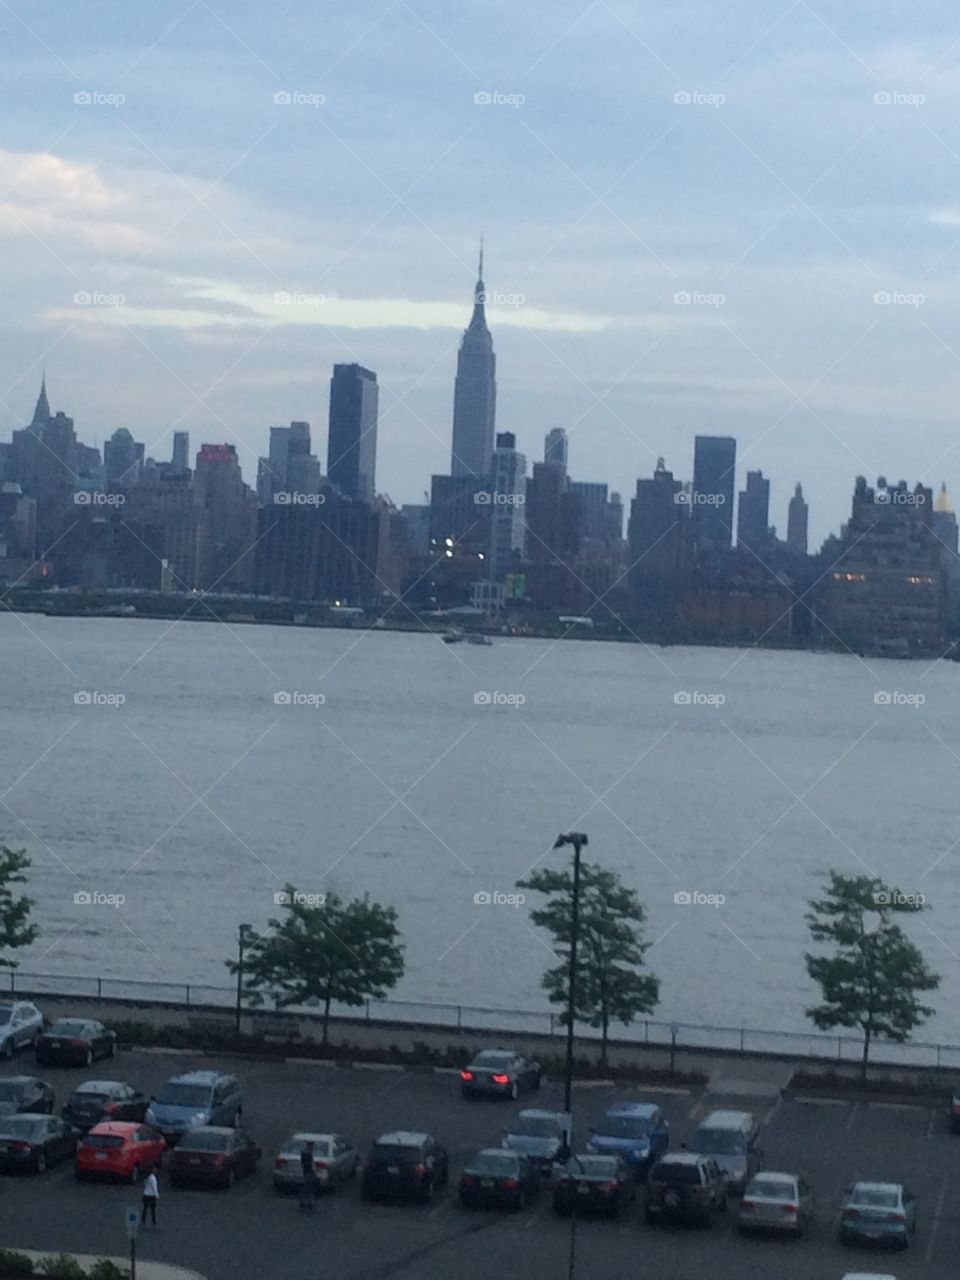 New York City skyline from NJ